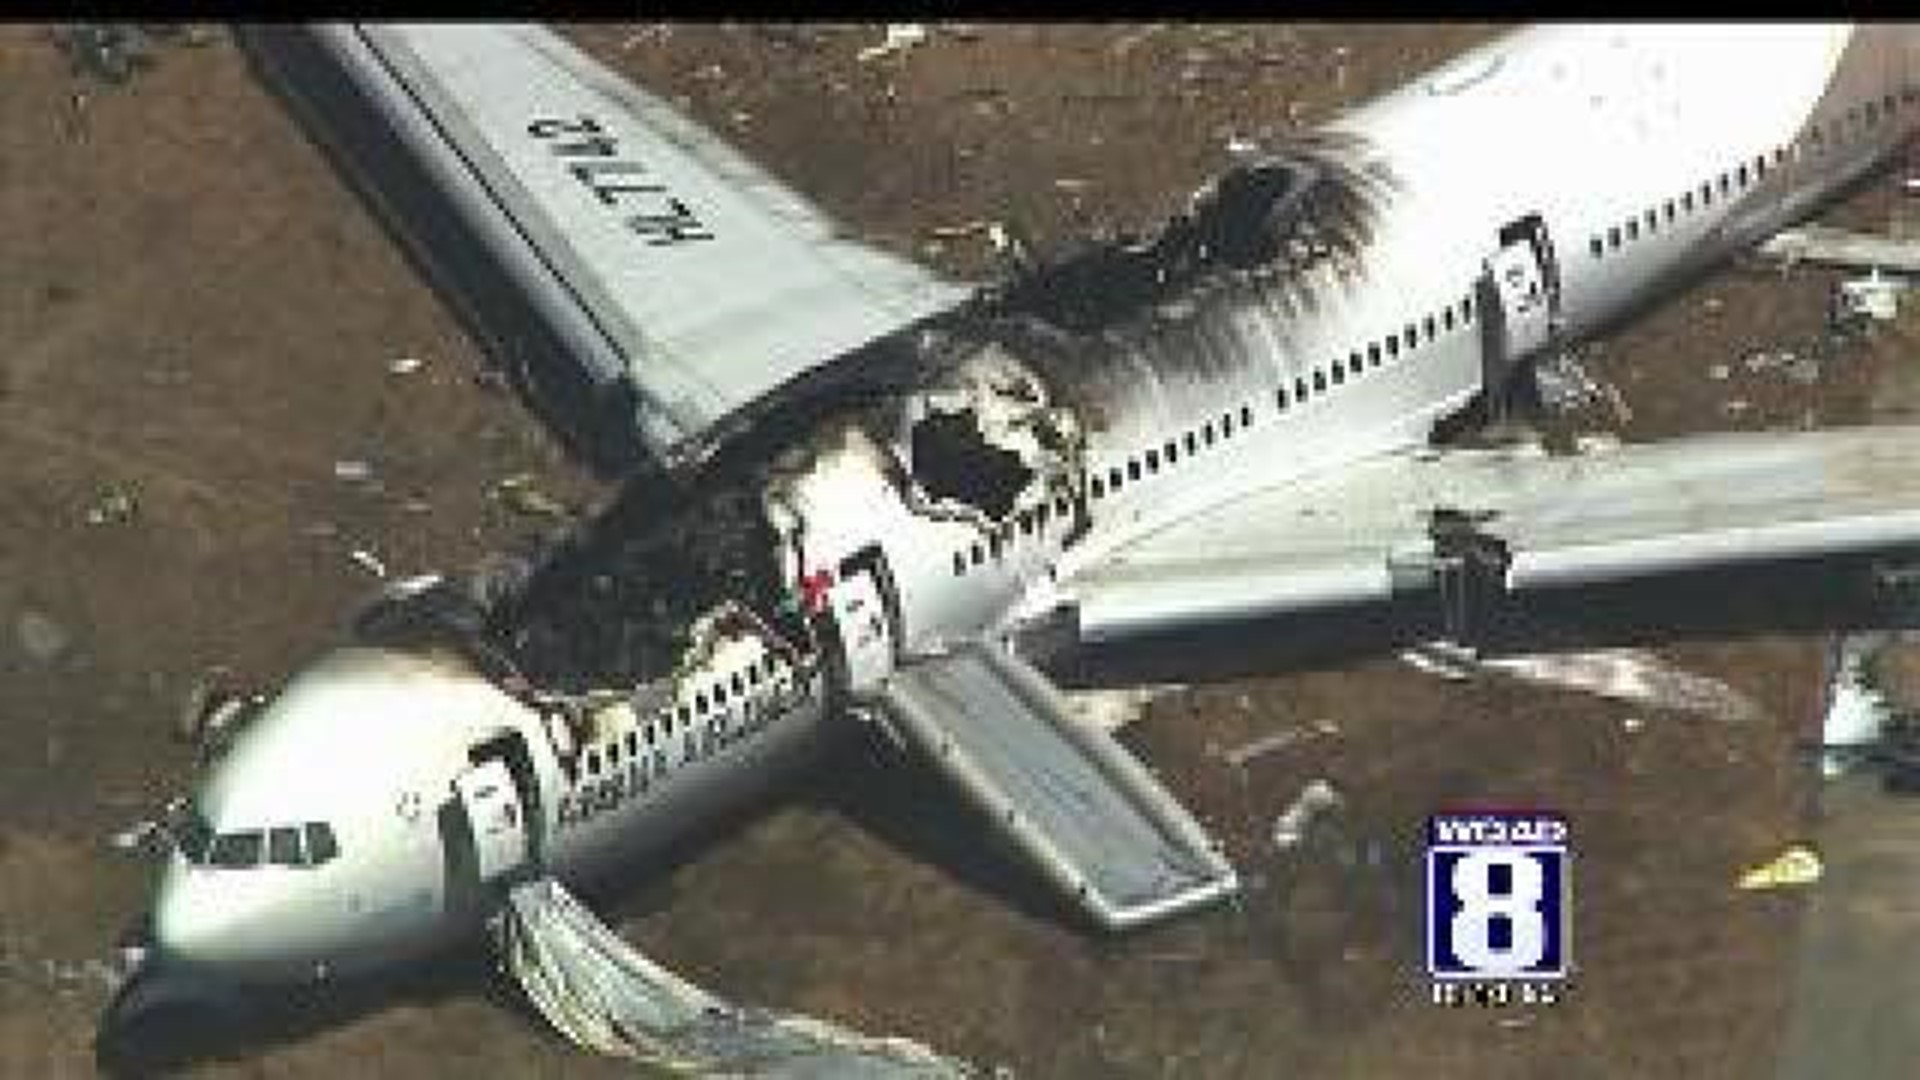 Updates on Boeing 777 crash landing into San Francisco International Airport